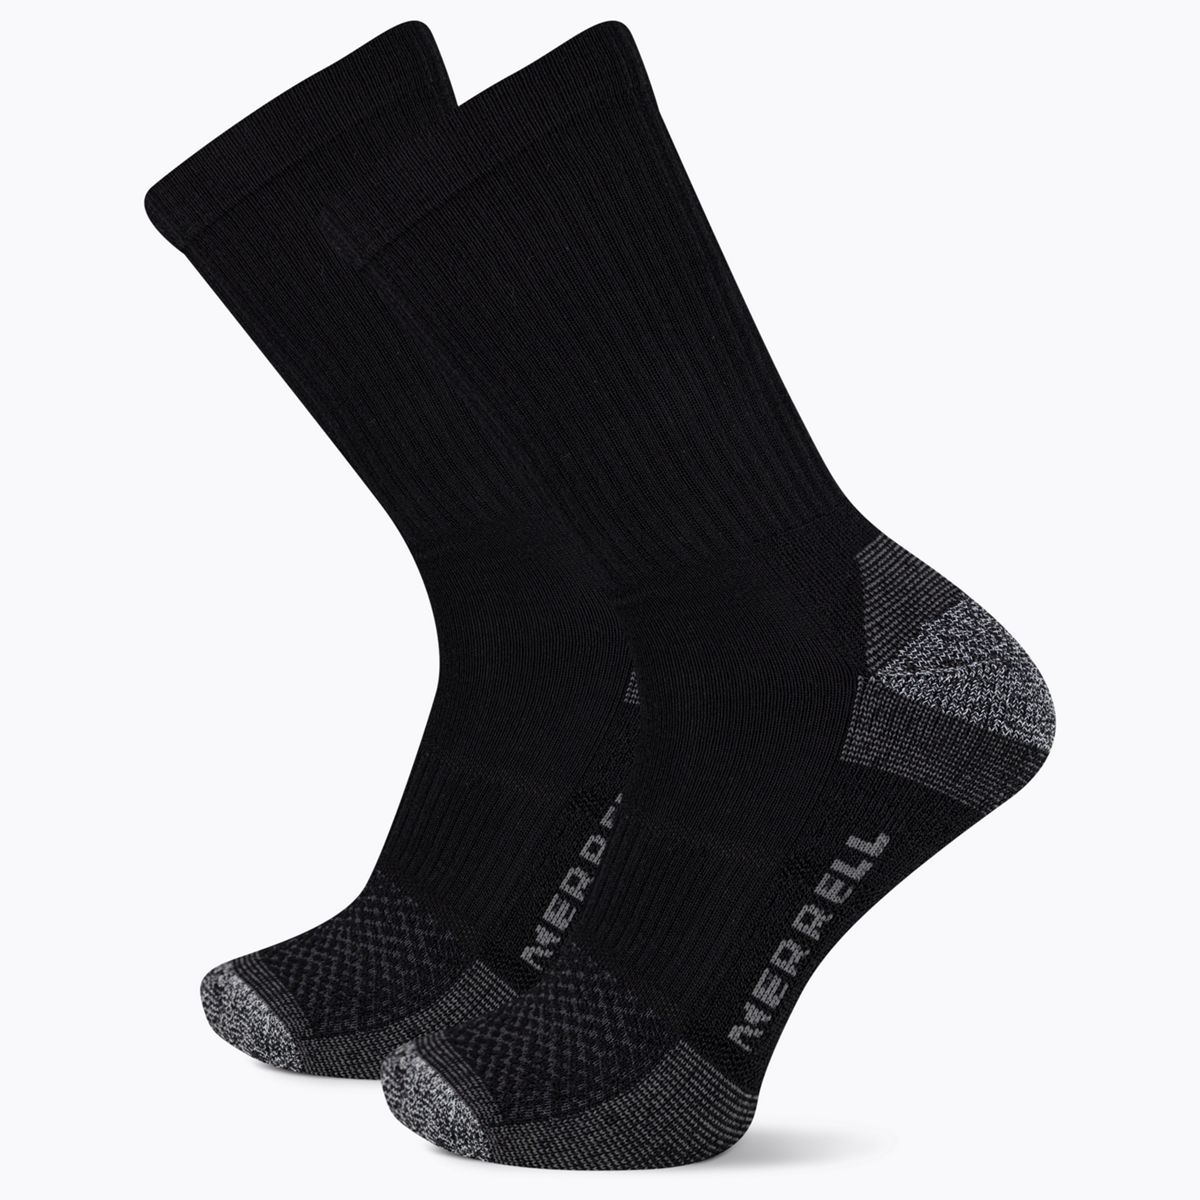 Rugged Steel Toe Crew Sock 2 Pack - Socks | Merrell